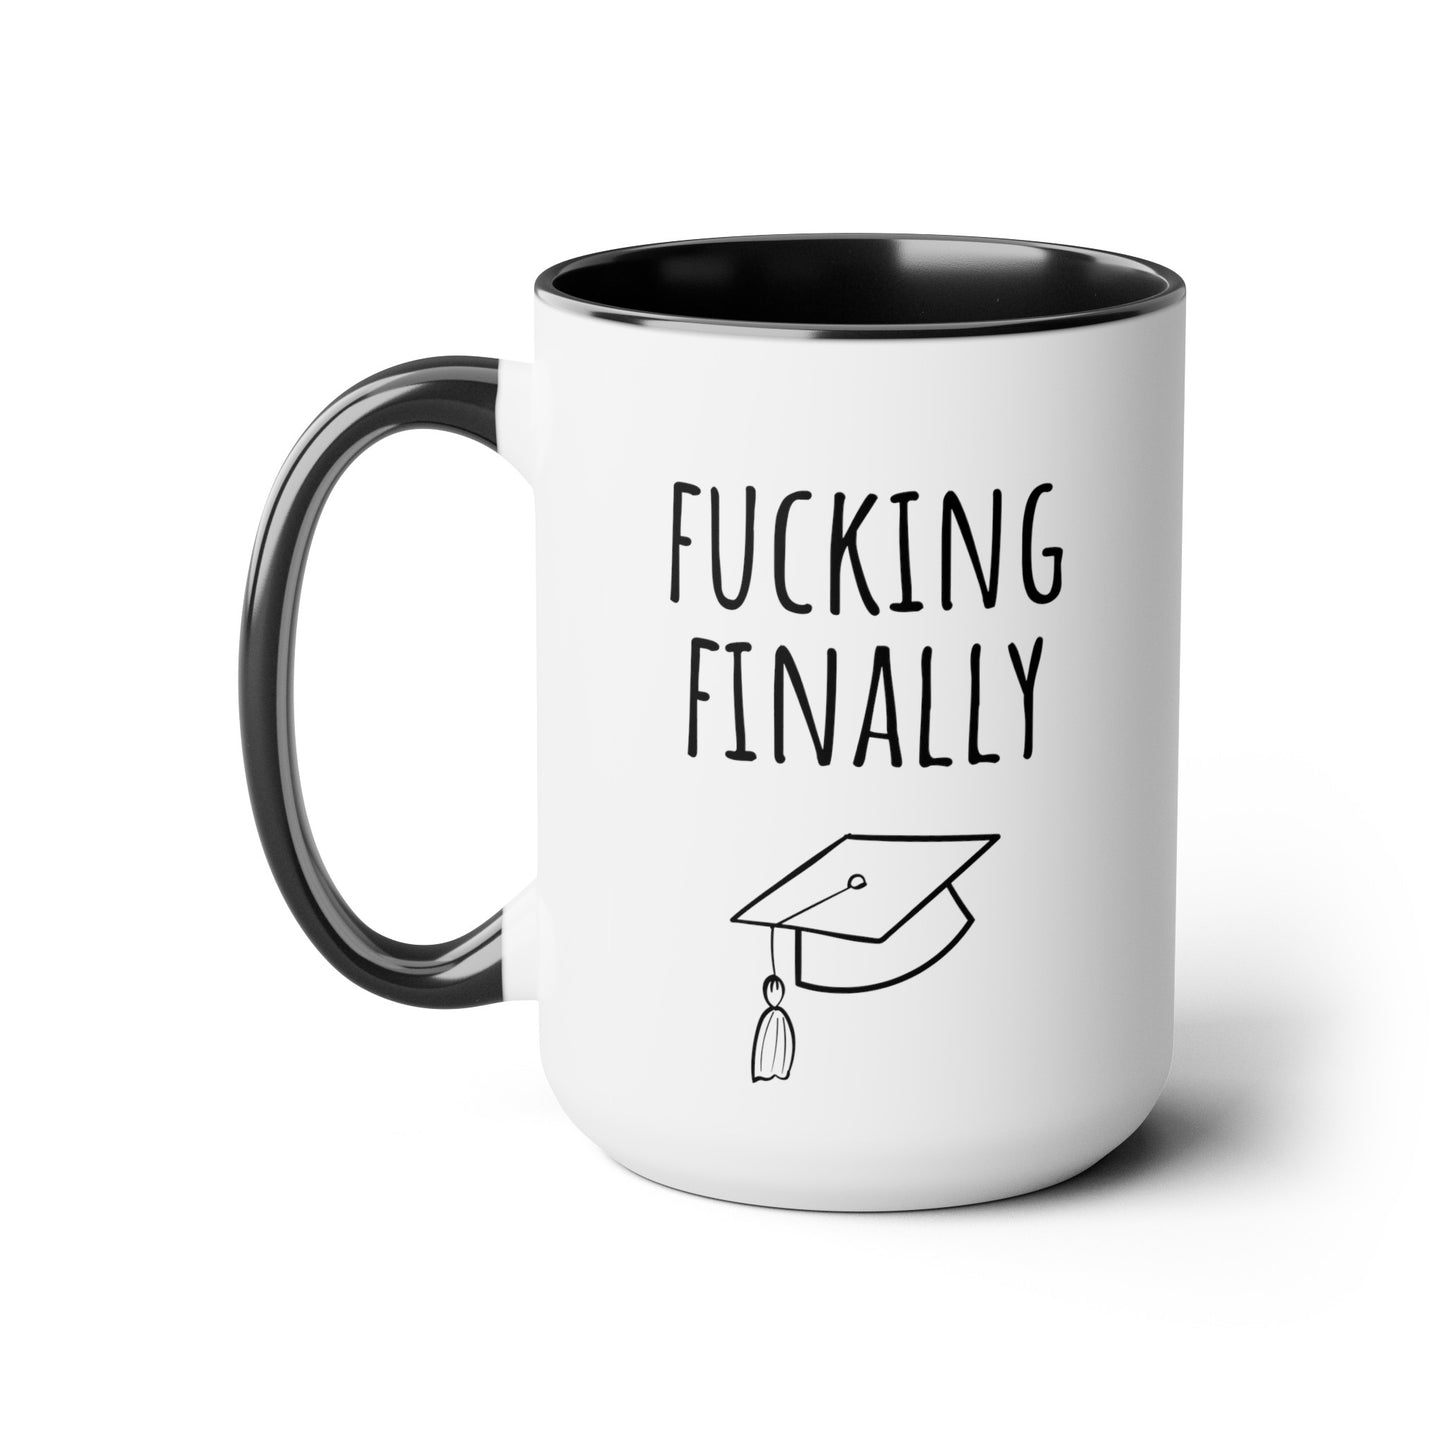 Finally Graduation Mug